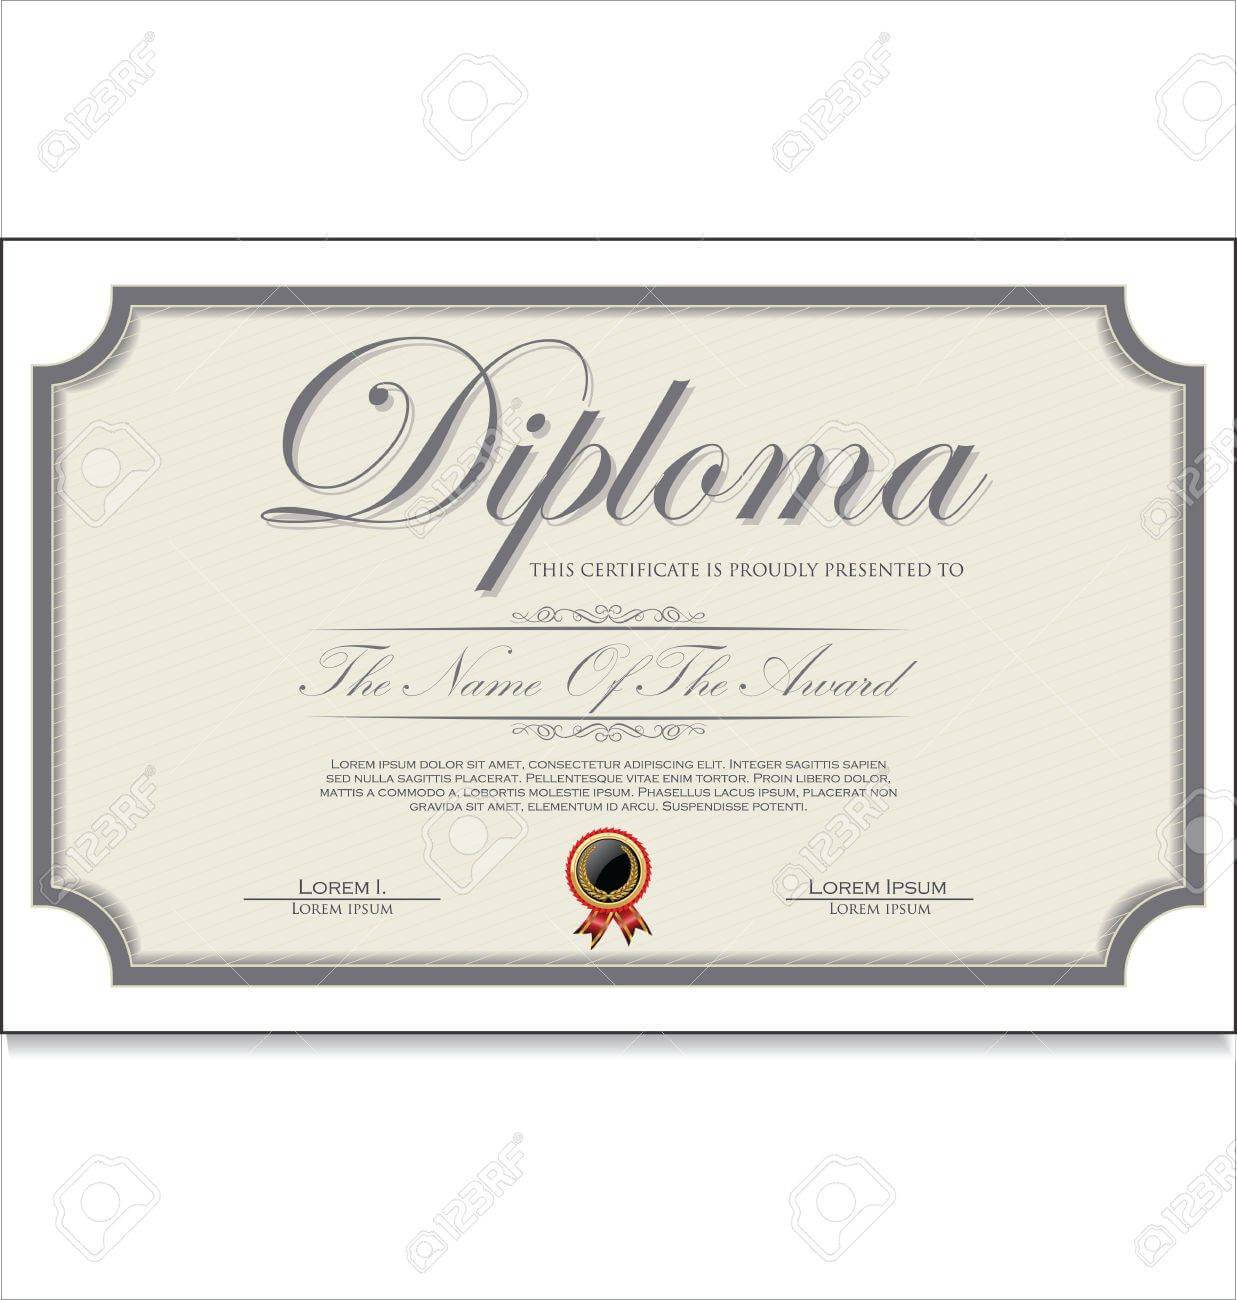 Certificate Template Pertaining To Commemorative Certificate Template